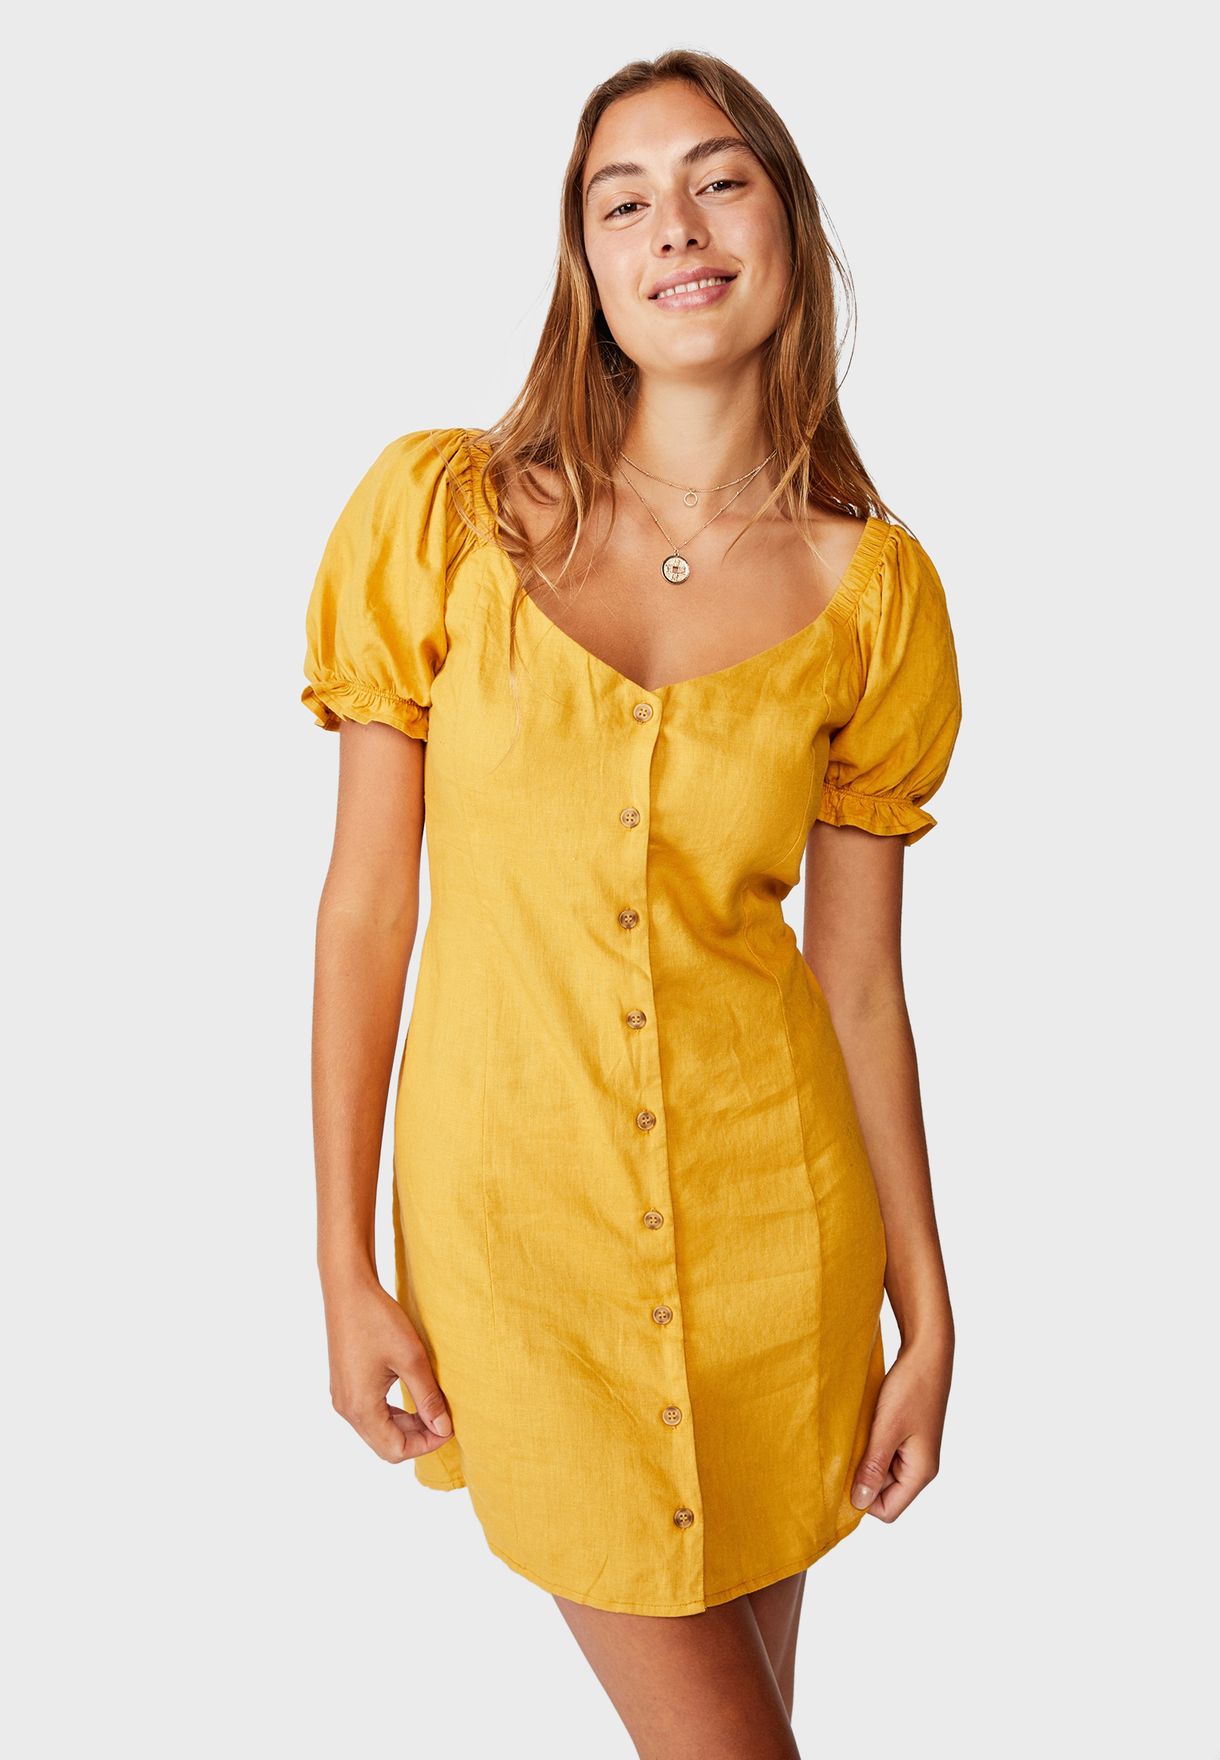 yellow button through dress